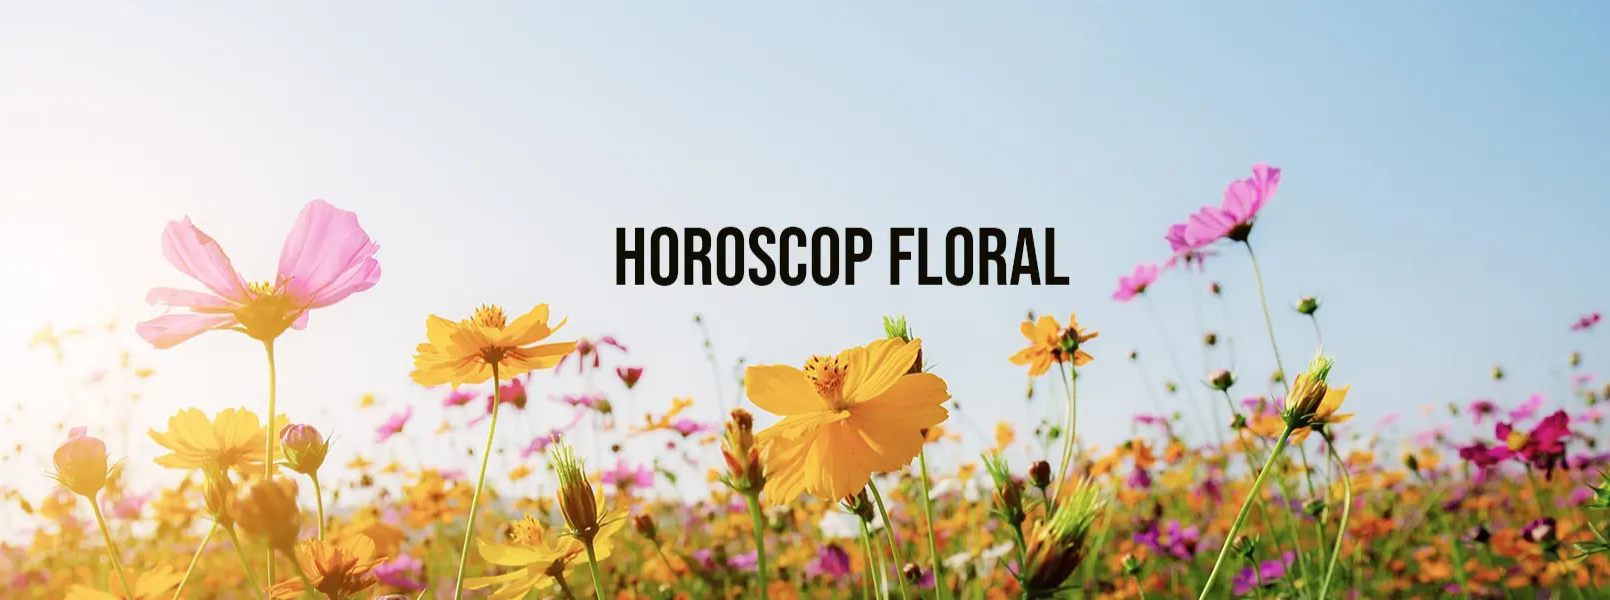 floral horoscop banner